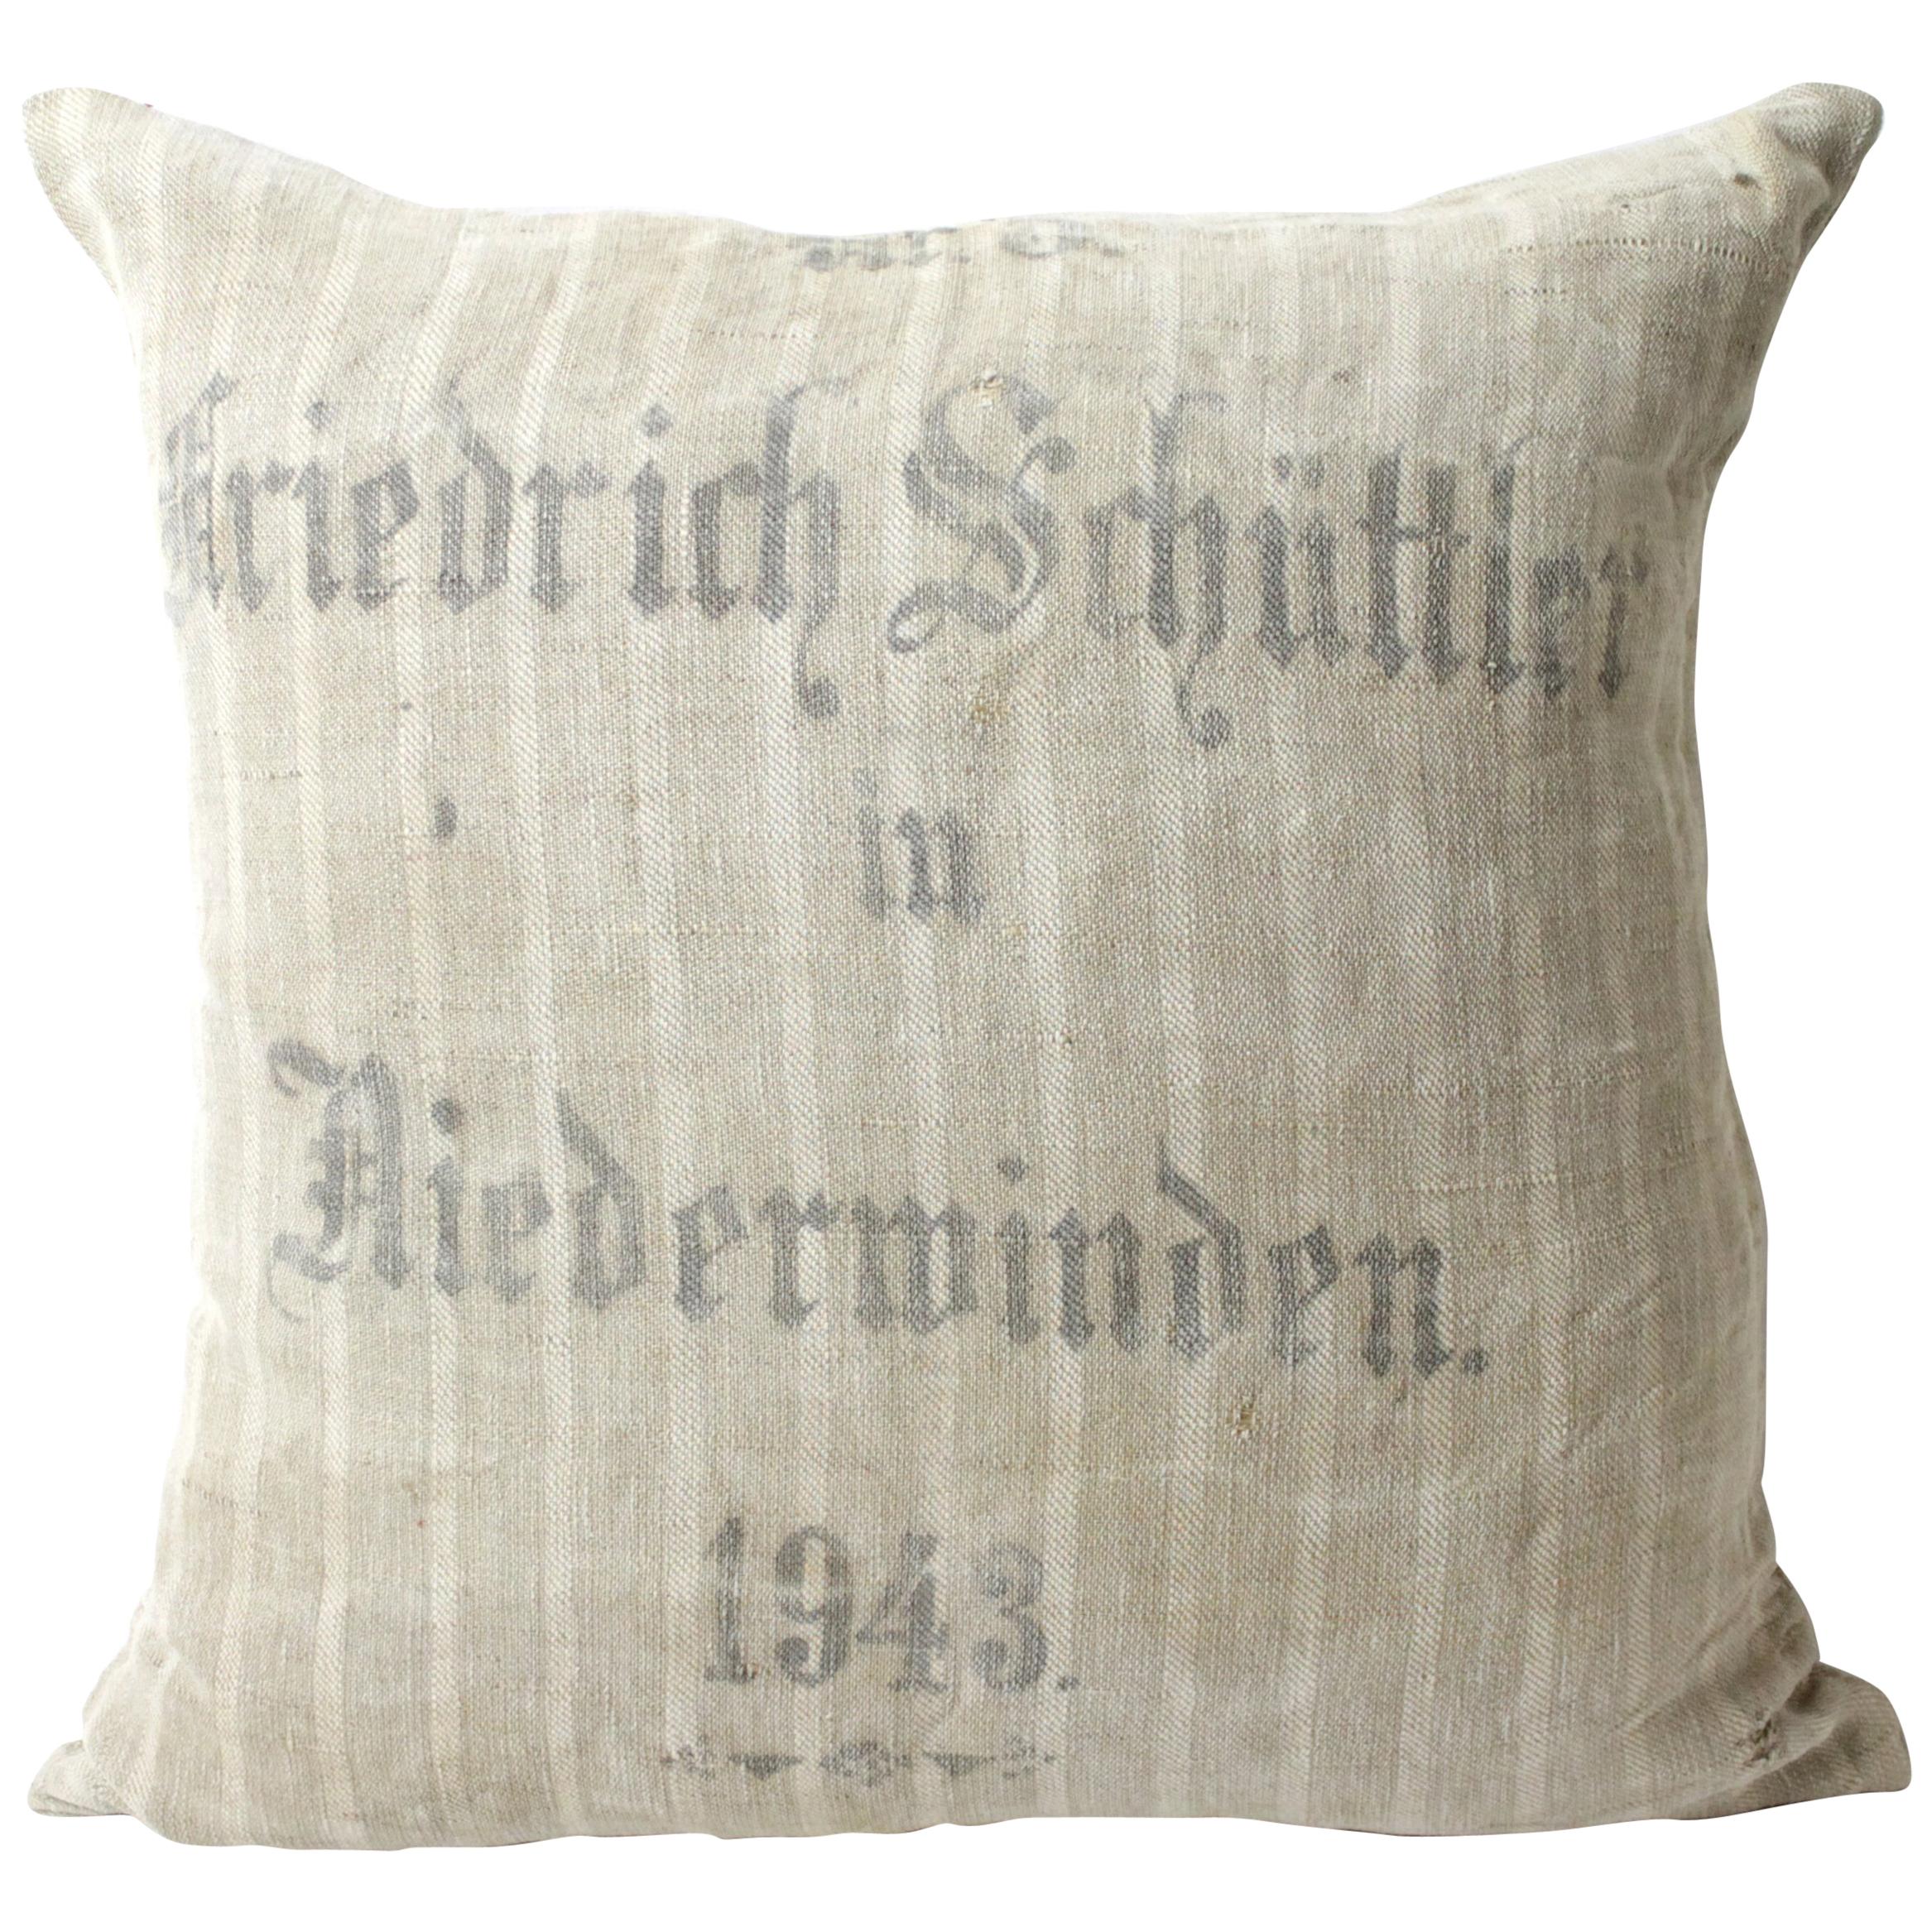 Original Antique Printed German Stripe Feed Sack Pillow For Sale